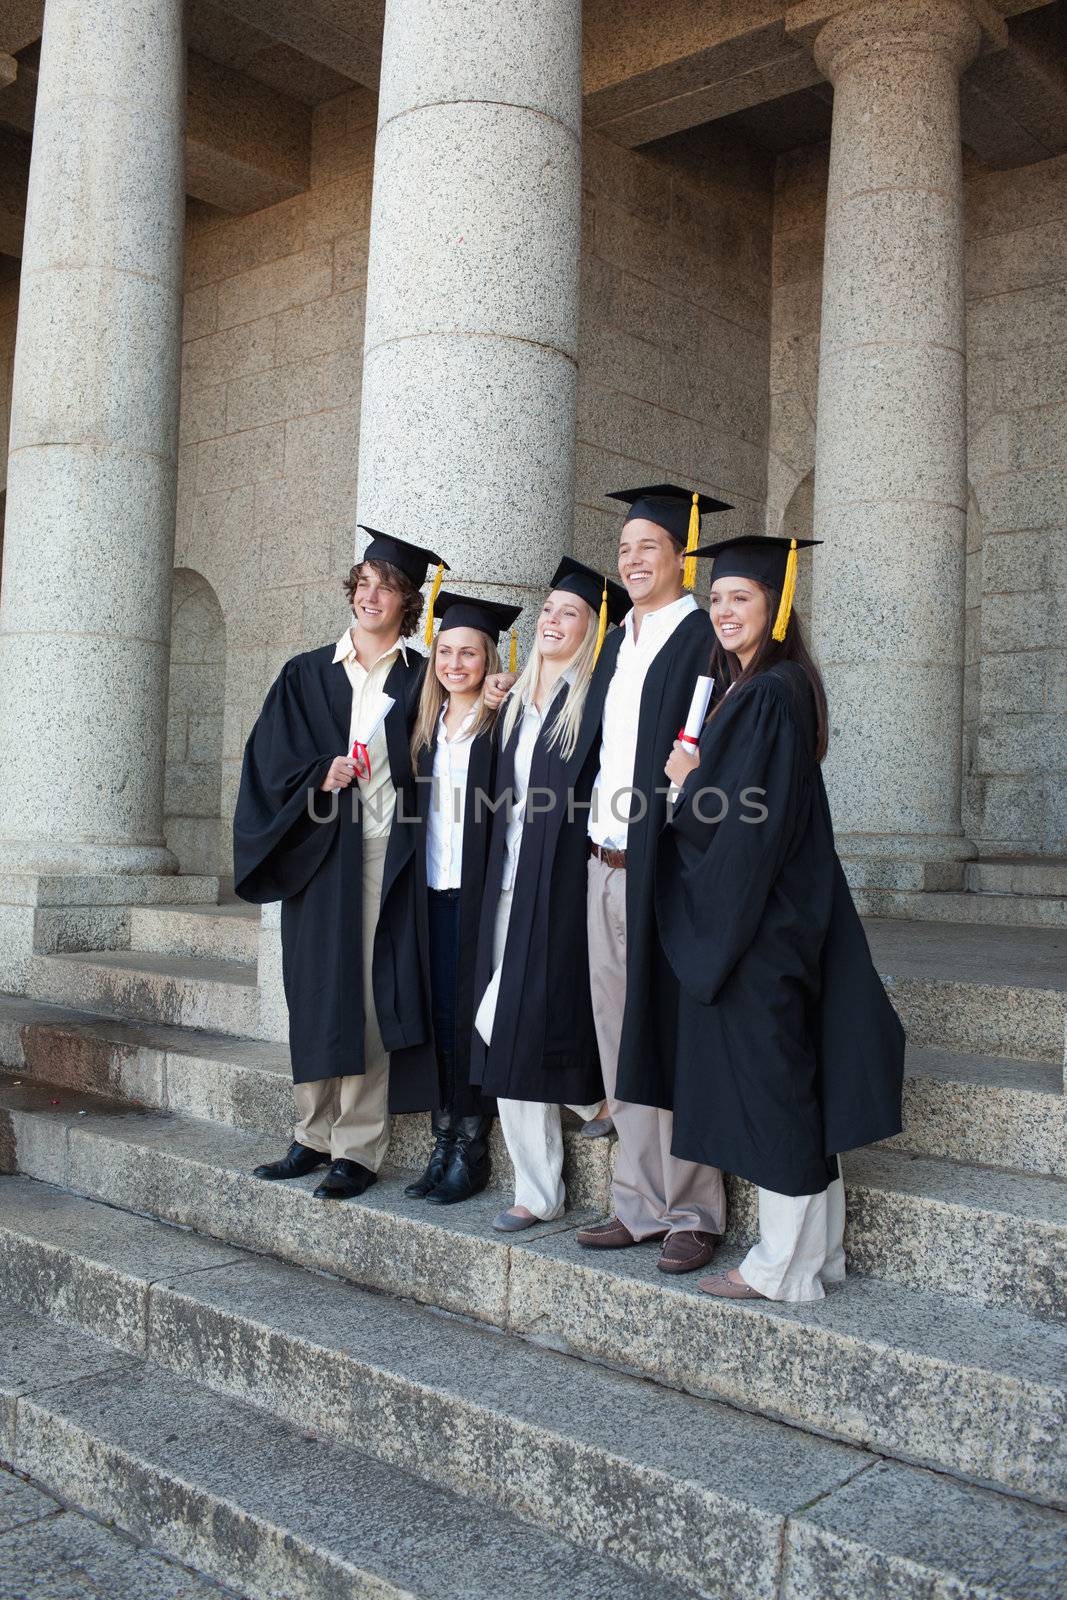 Graduates posing while smiling by Wavebreakmedia